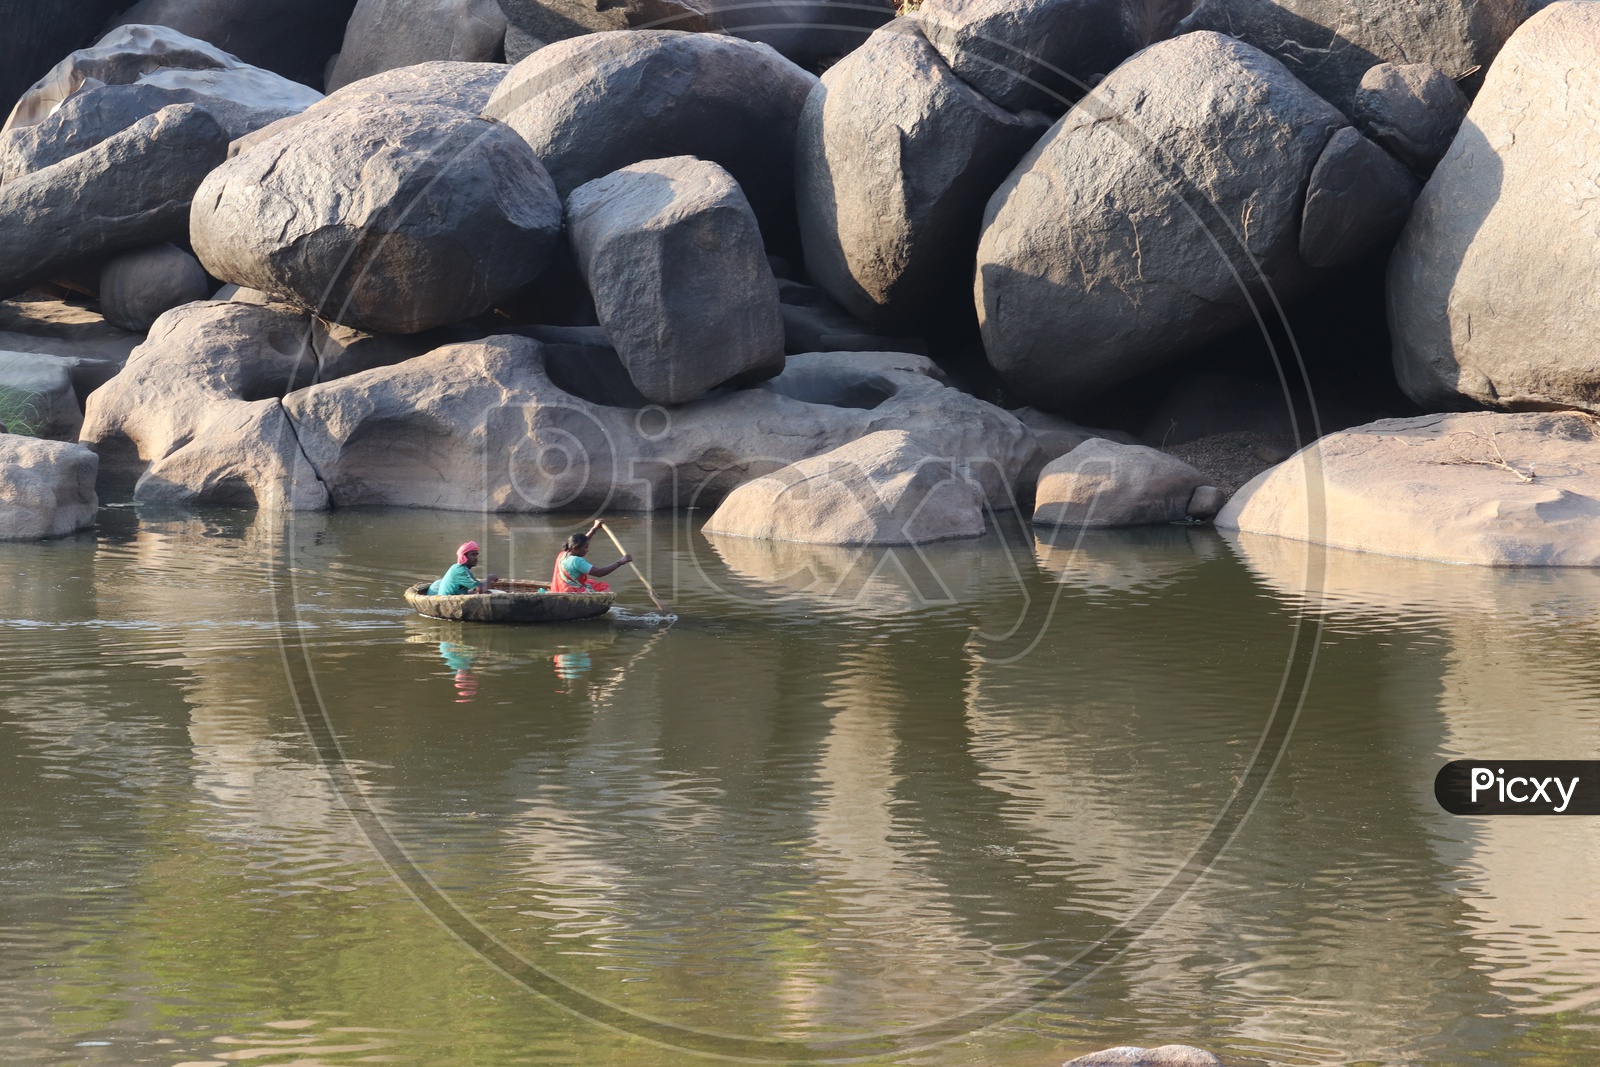 Coracle Boating On Tungabadra River  Between The Rocks In Hampi